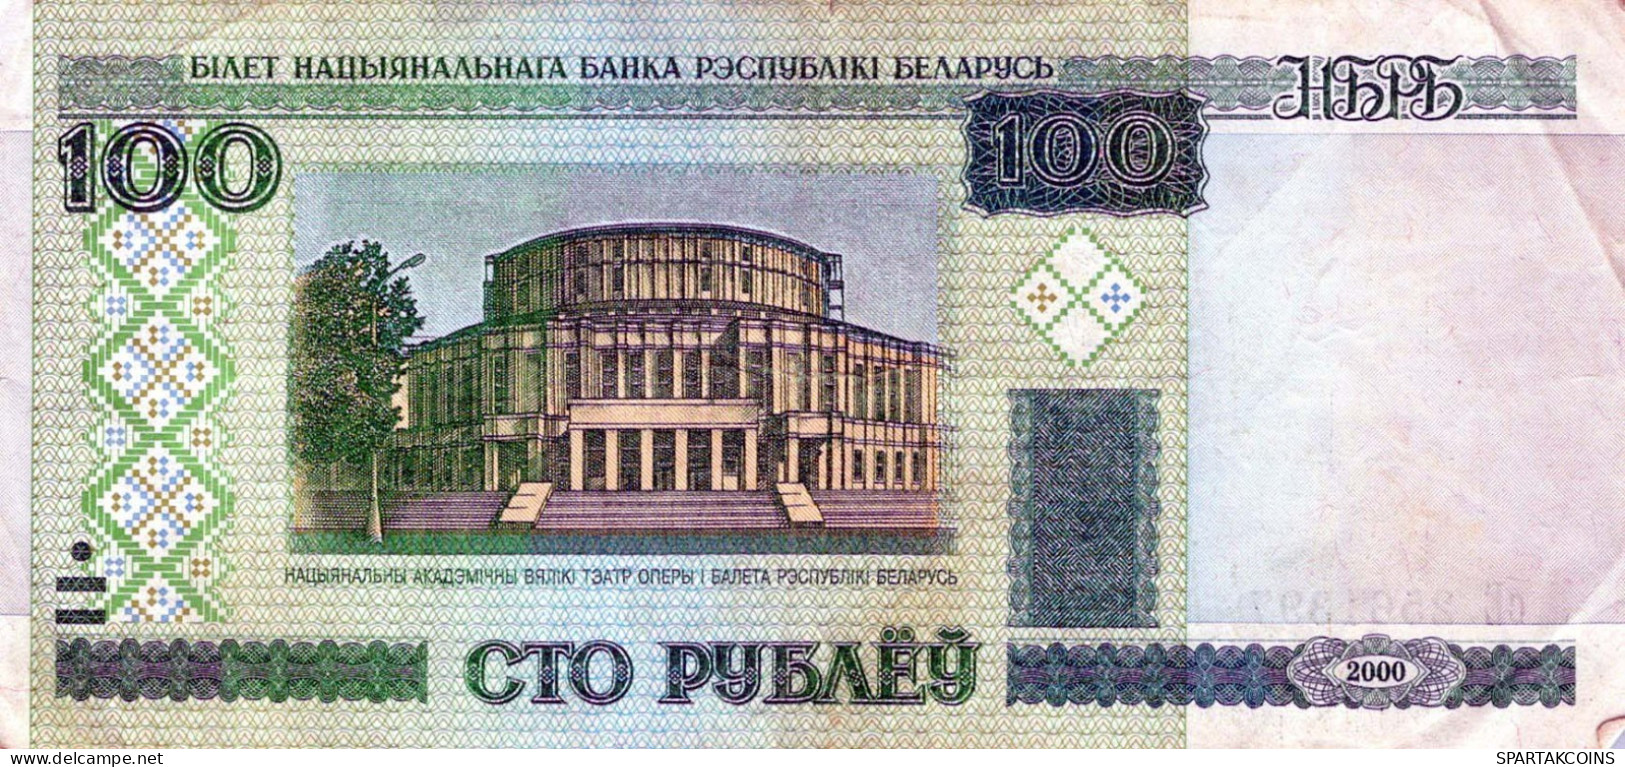 100 RUBLES 2000 BELARUS Papiergeld Banknote #PK608 - [11] Emisiones Locales